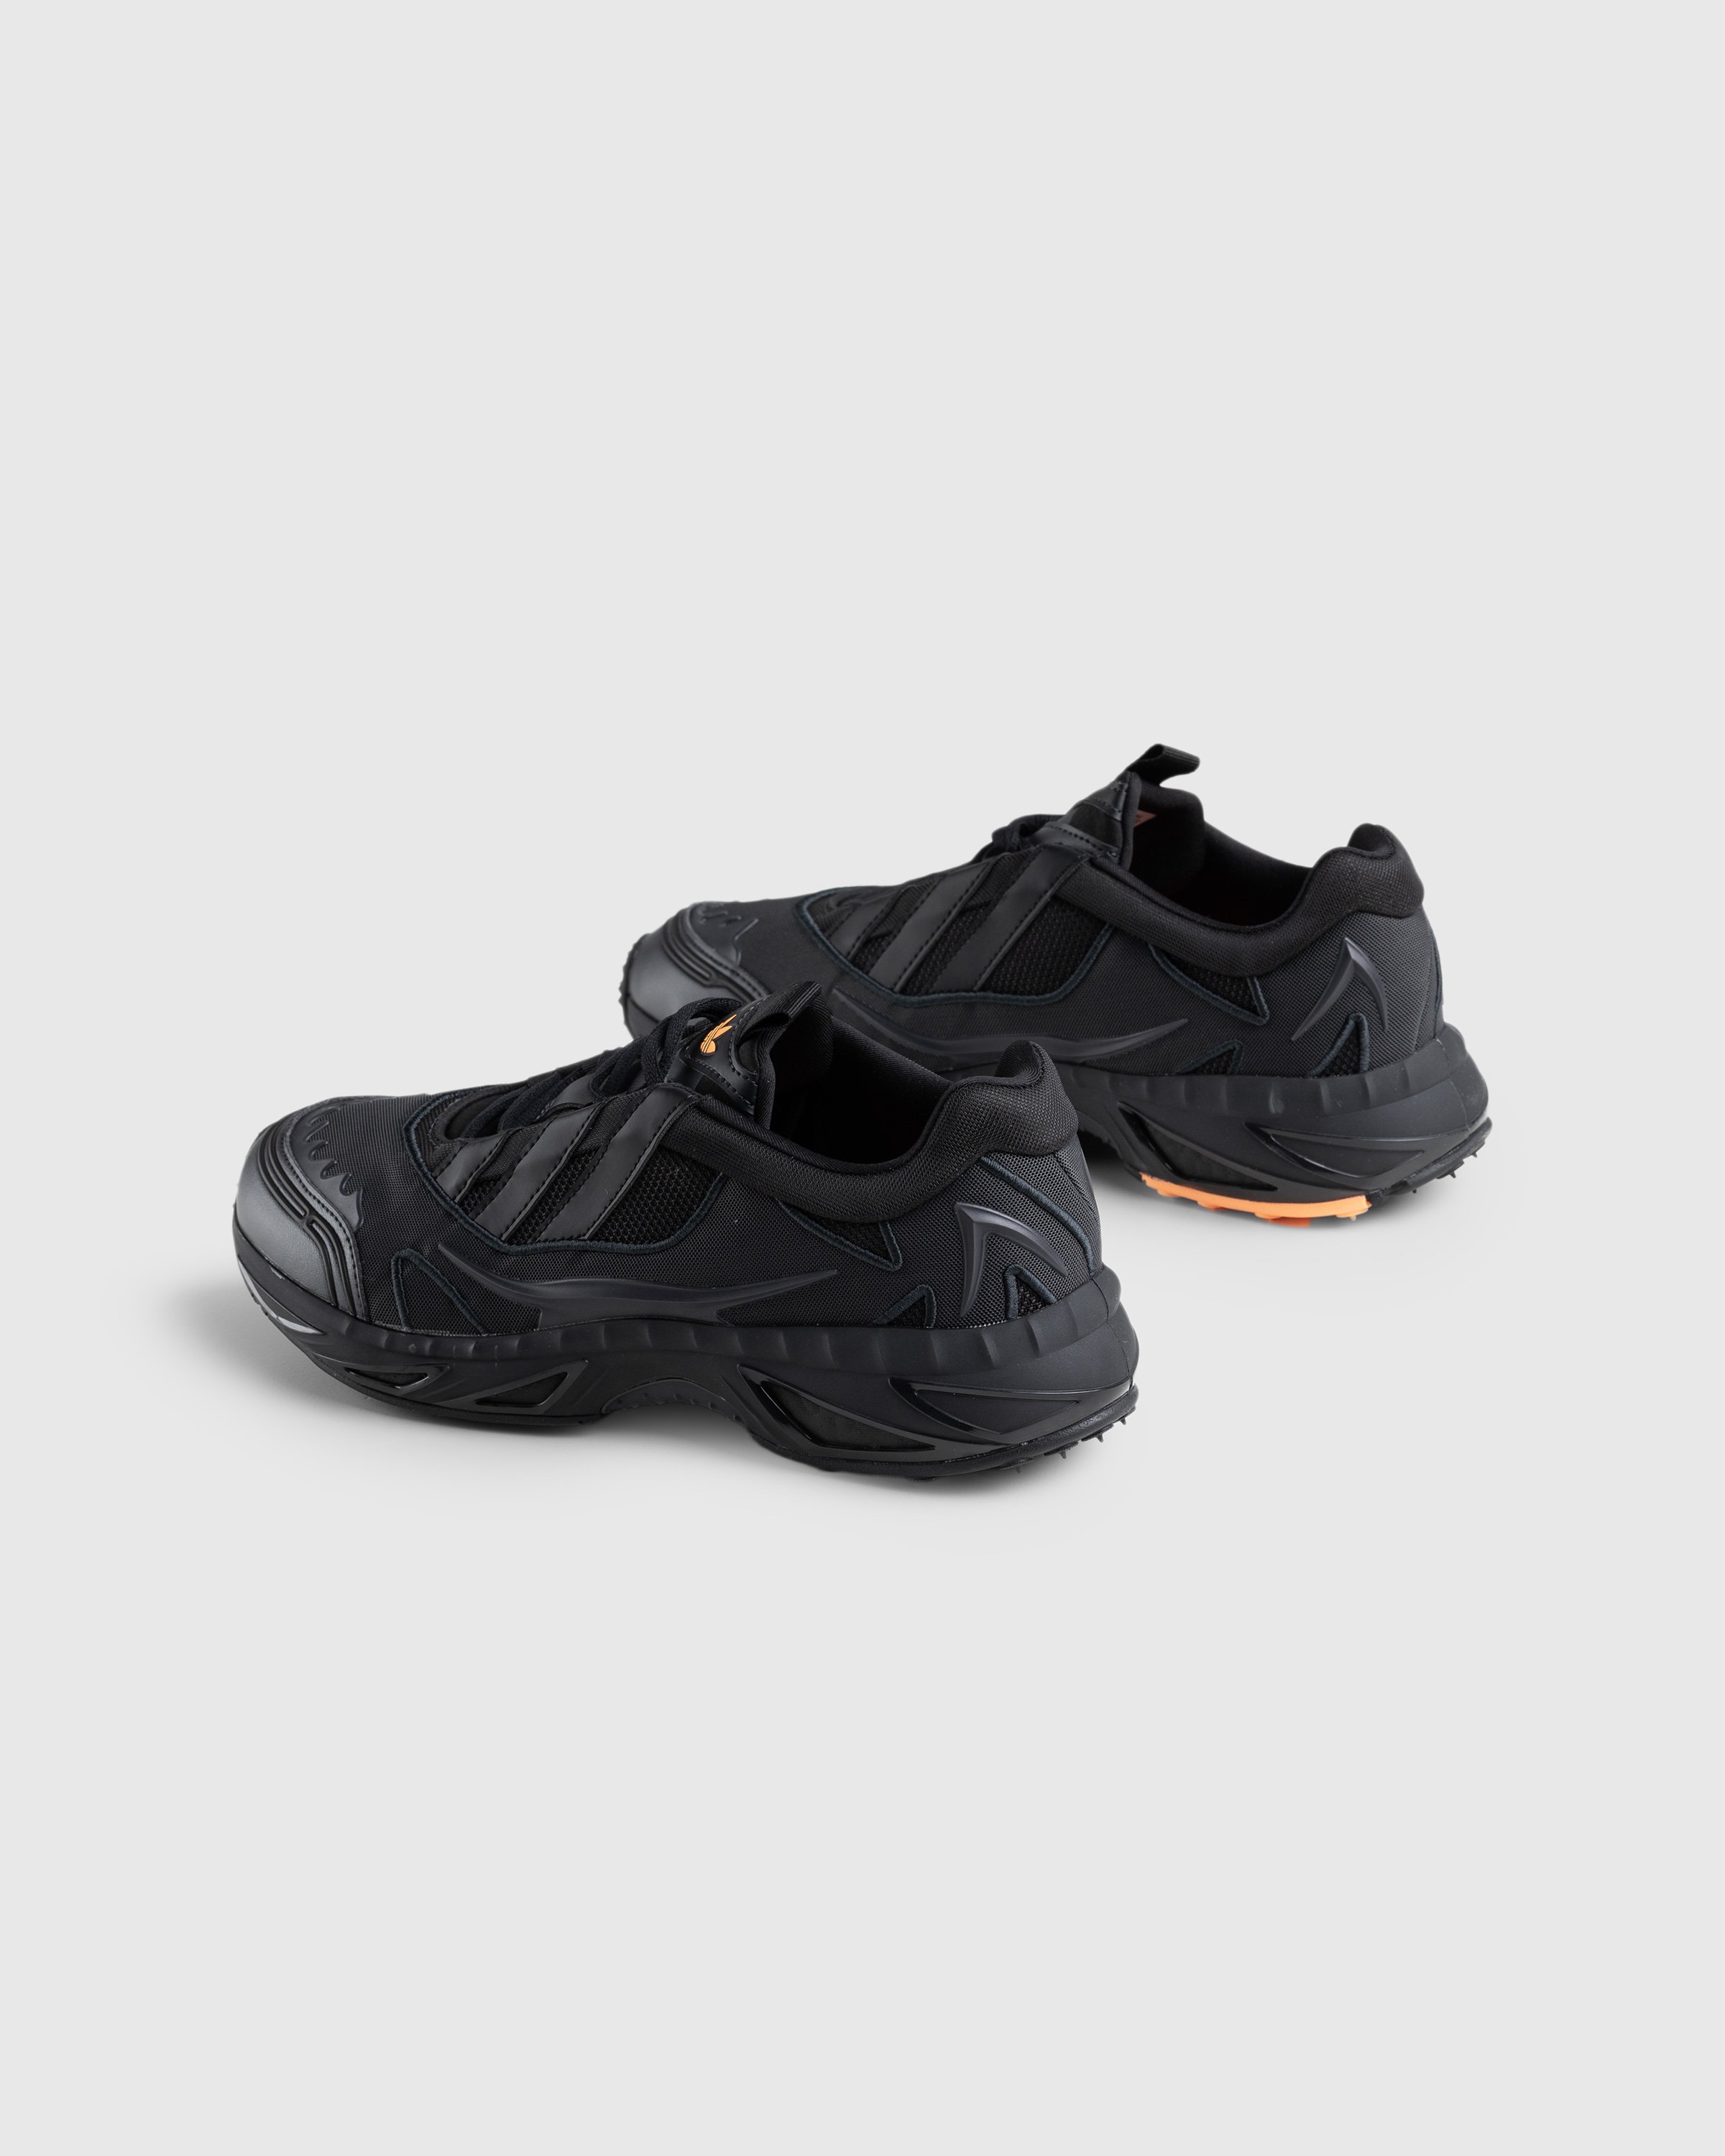 Adidas - Xare Boost Black - Footwear - Black - Image 4